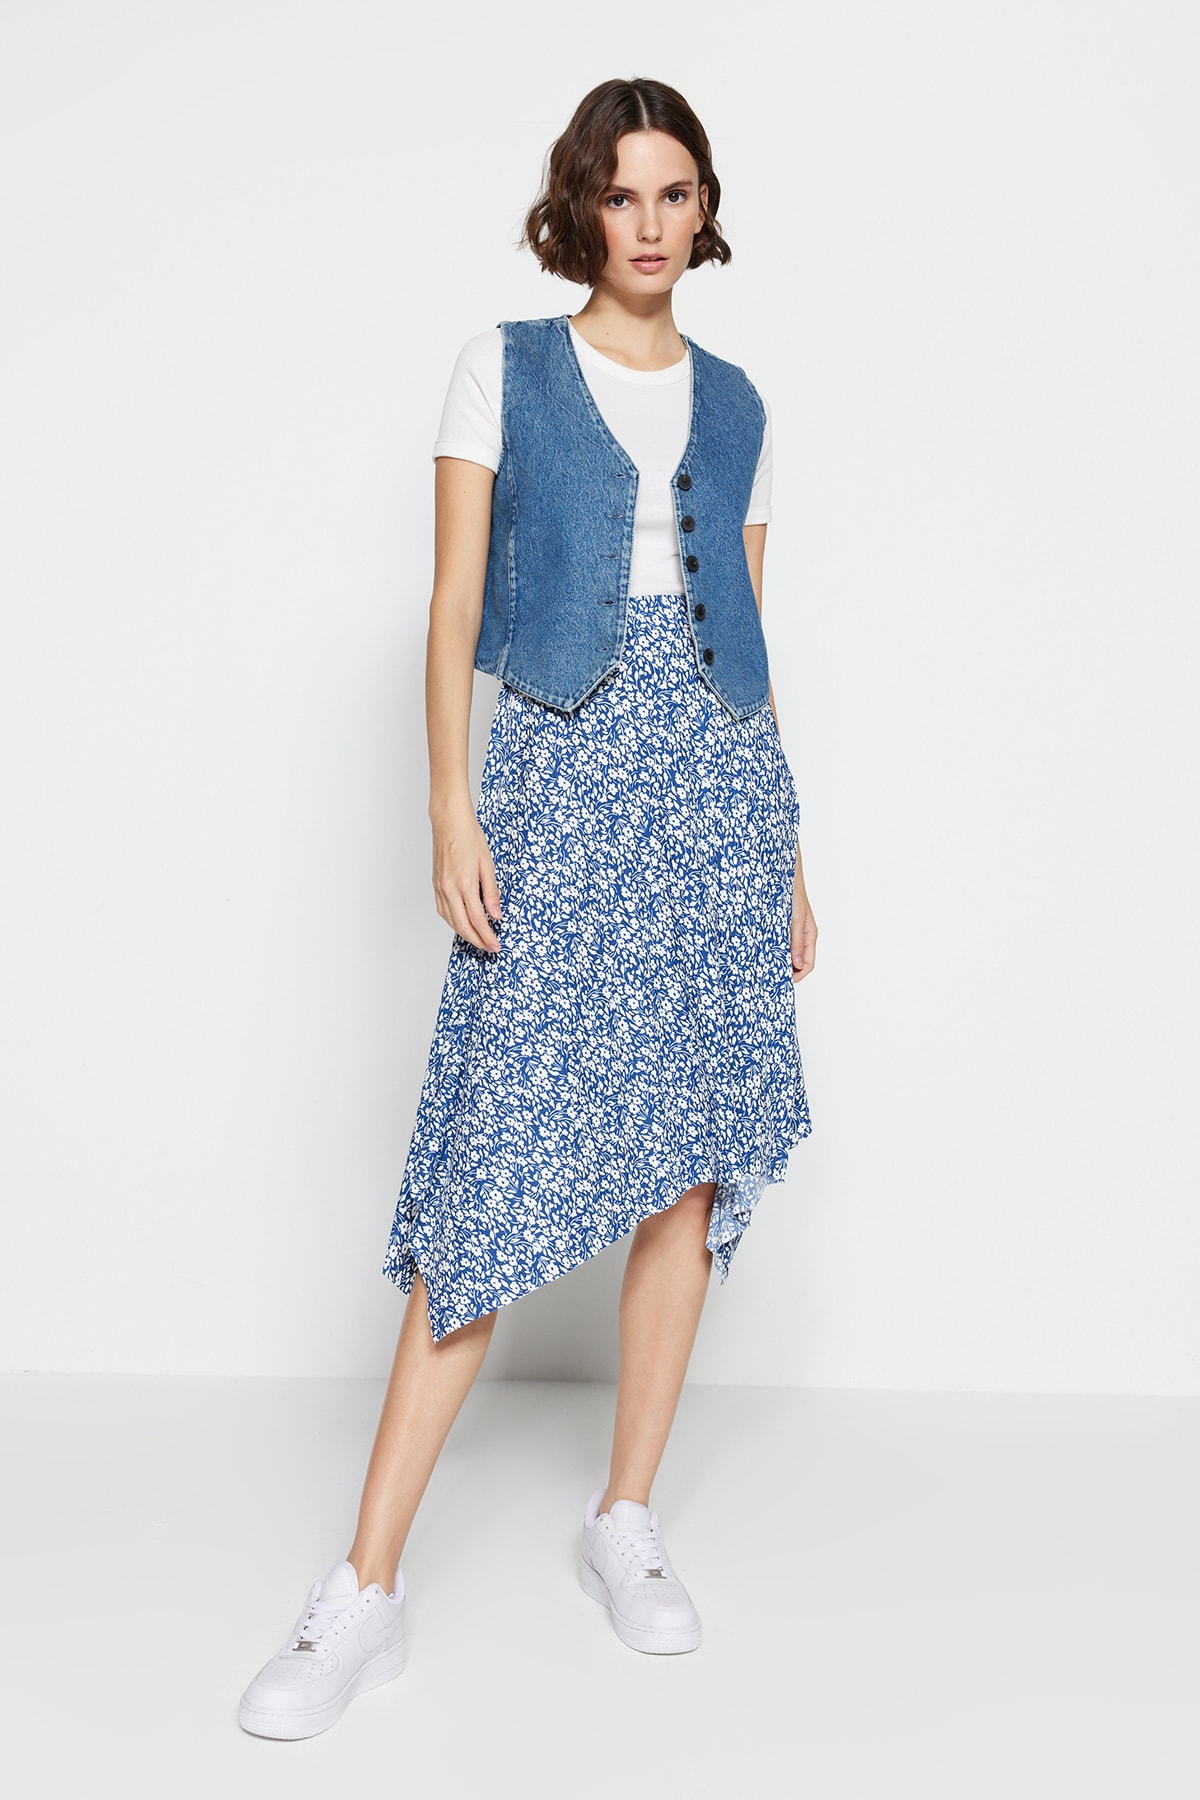 Trendyol Indigo Patterned Ruffle Asymmetrical High Waist Midi Stretch Knit Skirt